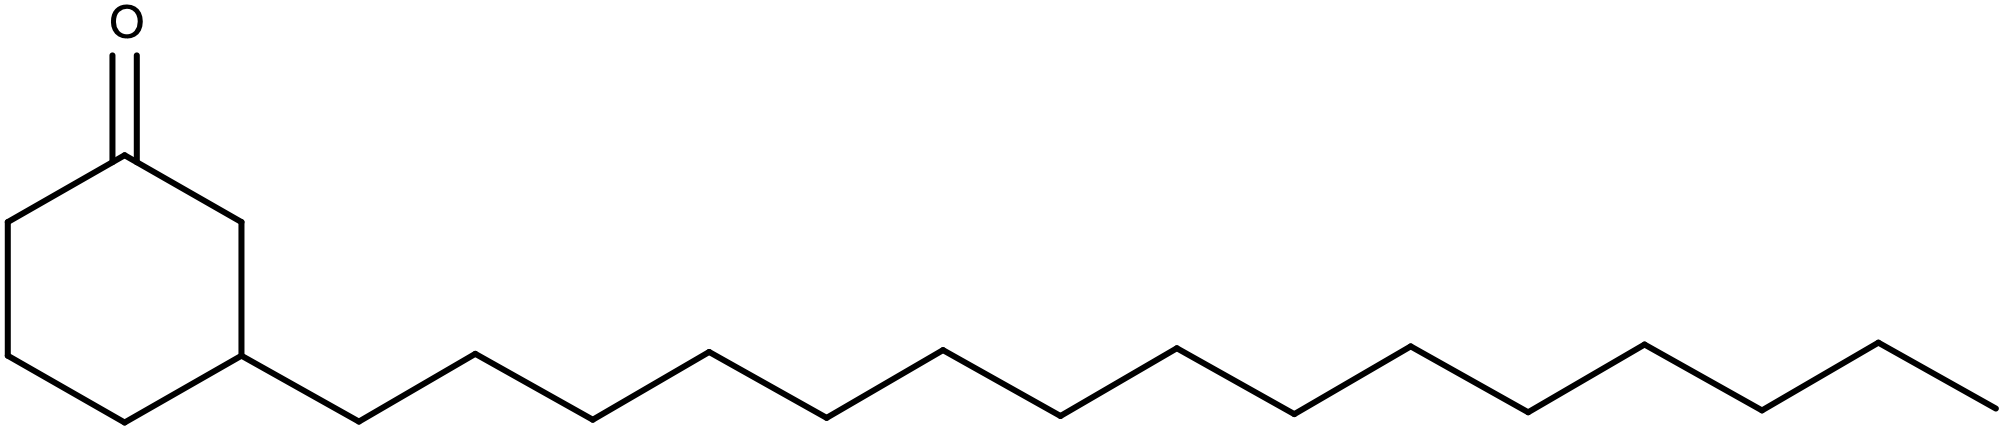 CNSL Cyclohexanone is an alternate to petroleum based cyclohexanone